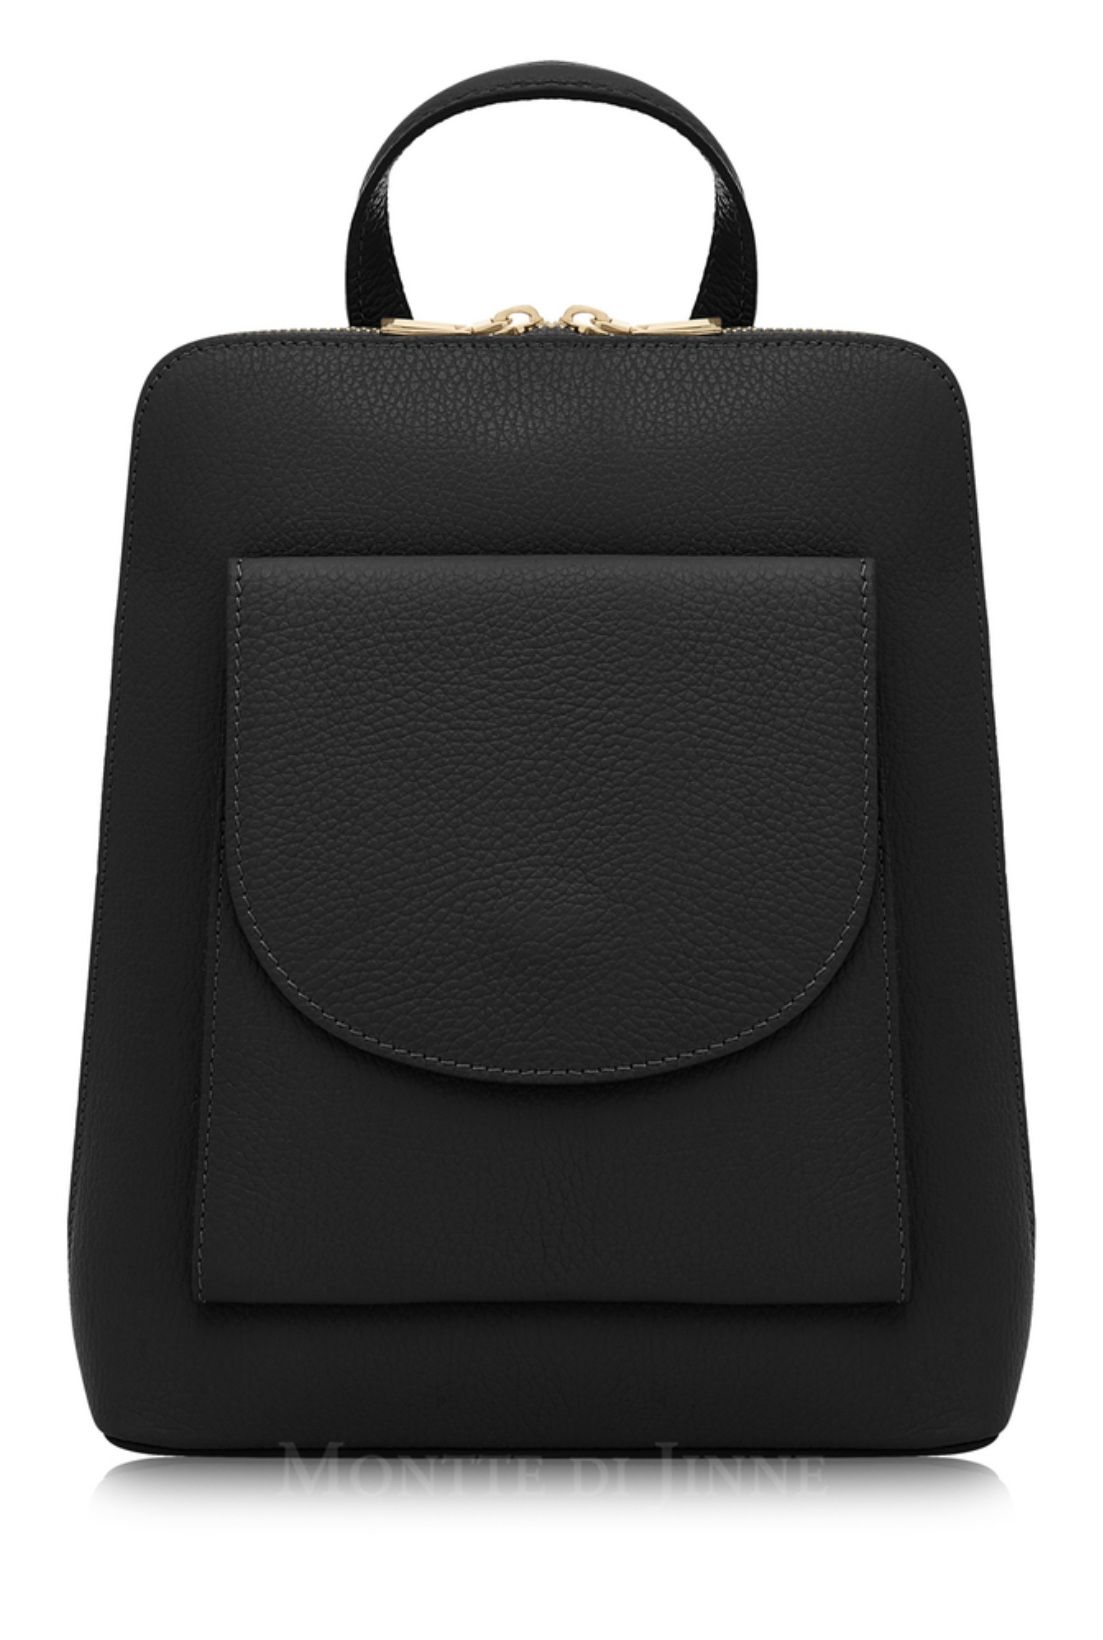 Italian Leather Backpack - Black